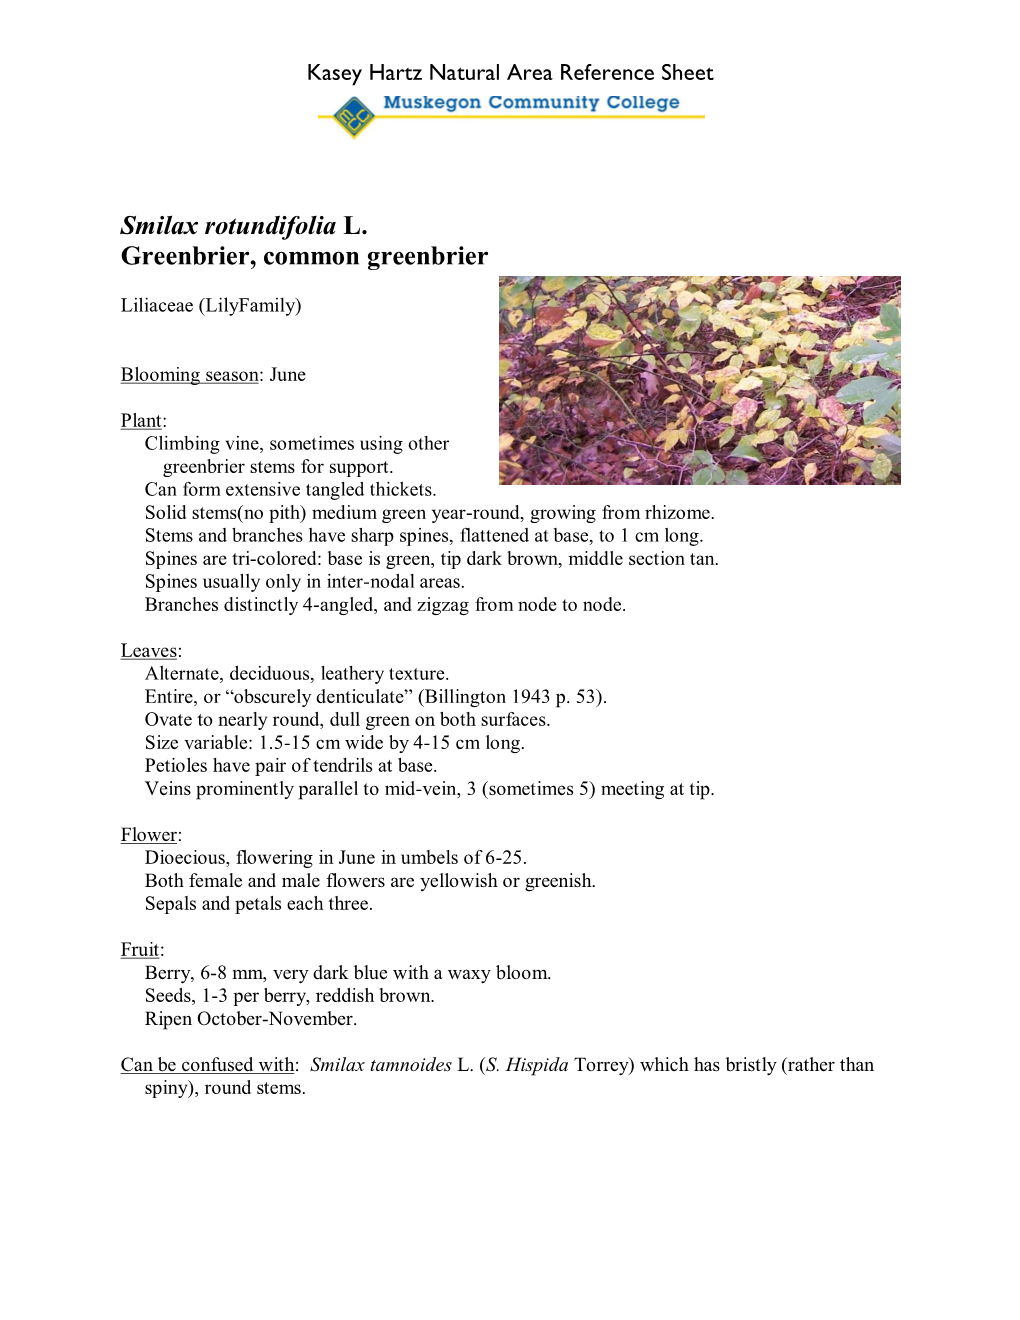 Smilax Rotundifolia L. Greenbrier, Common Greenbrier